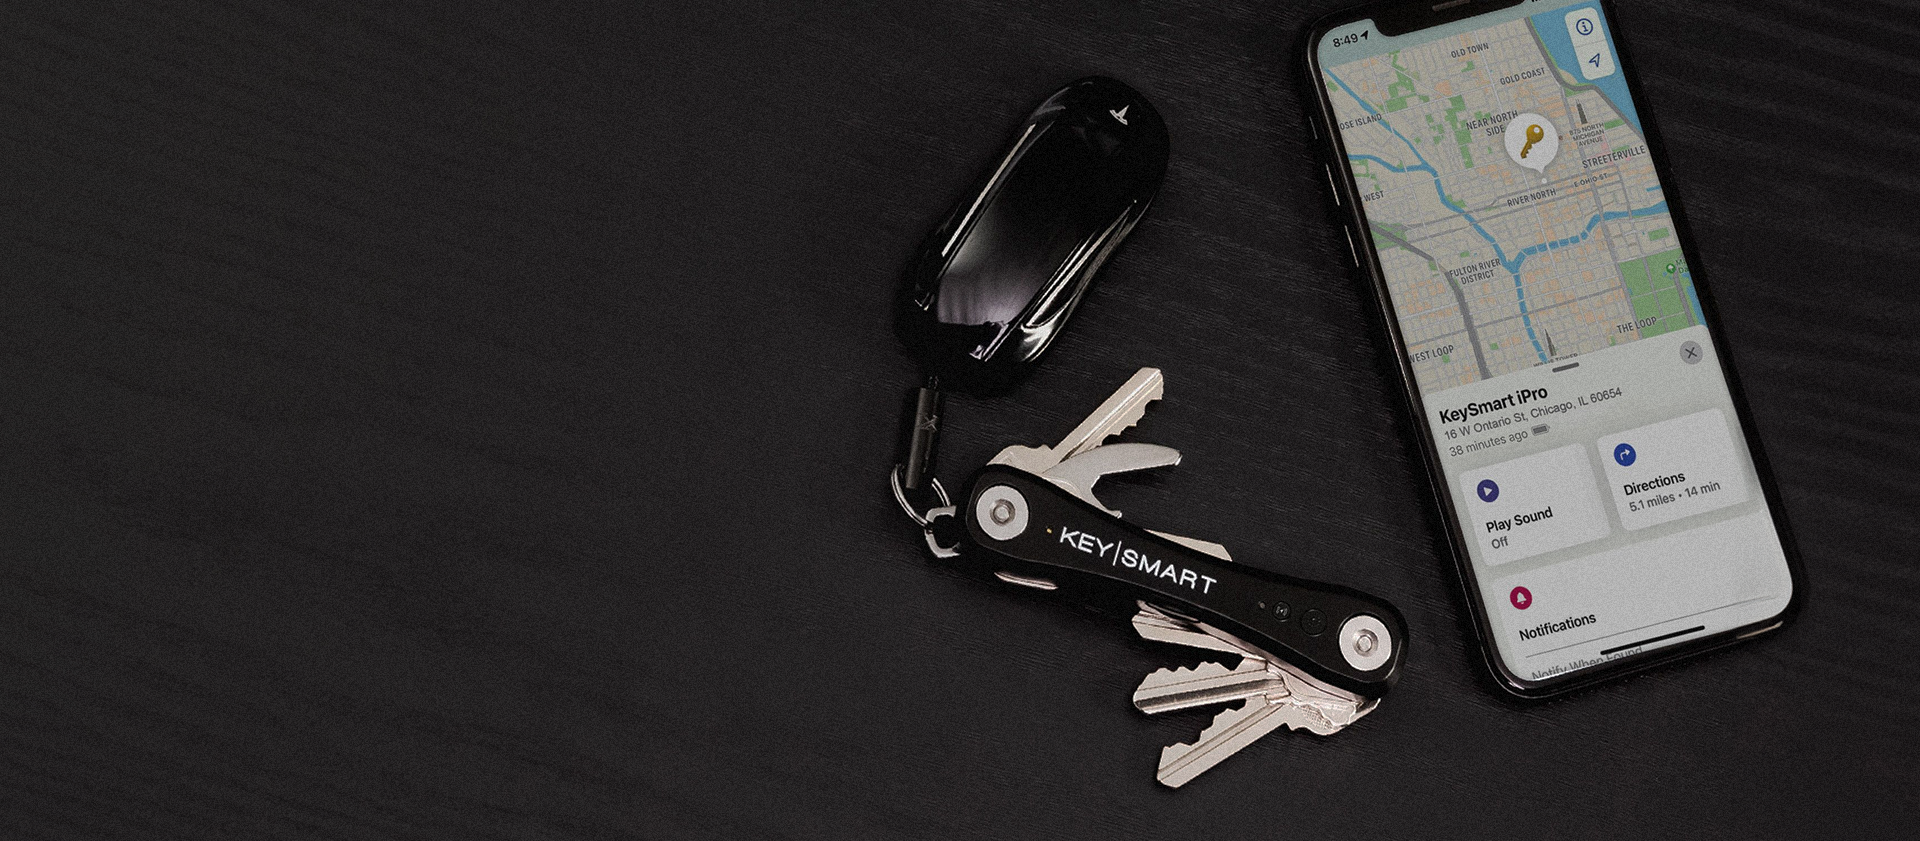 KeySmart - Compact Key Holder and Keychain Organizer (up to 14 Keys, Blue)  Bundle with KeySmart MultiTool - 5-in-1 Multi-Purpose Keychain Tool with